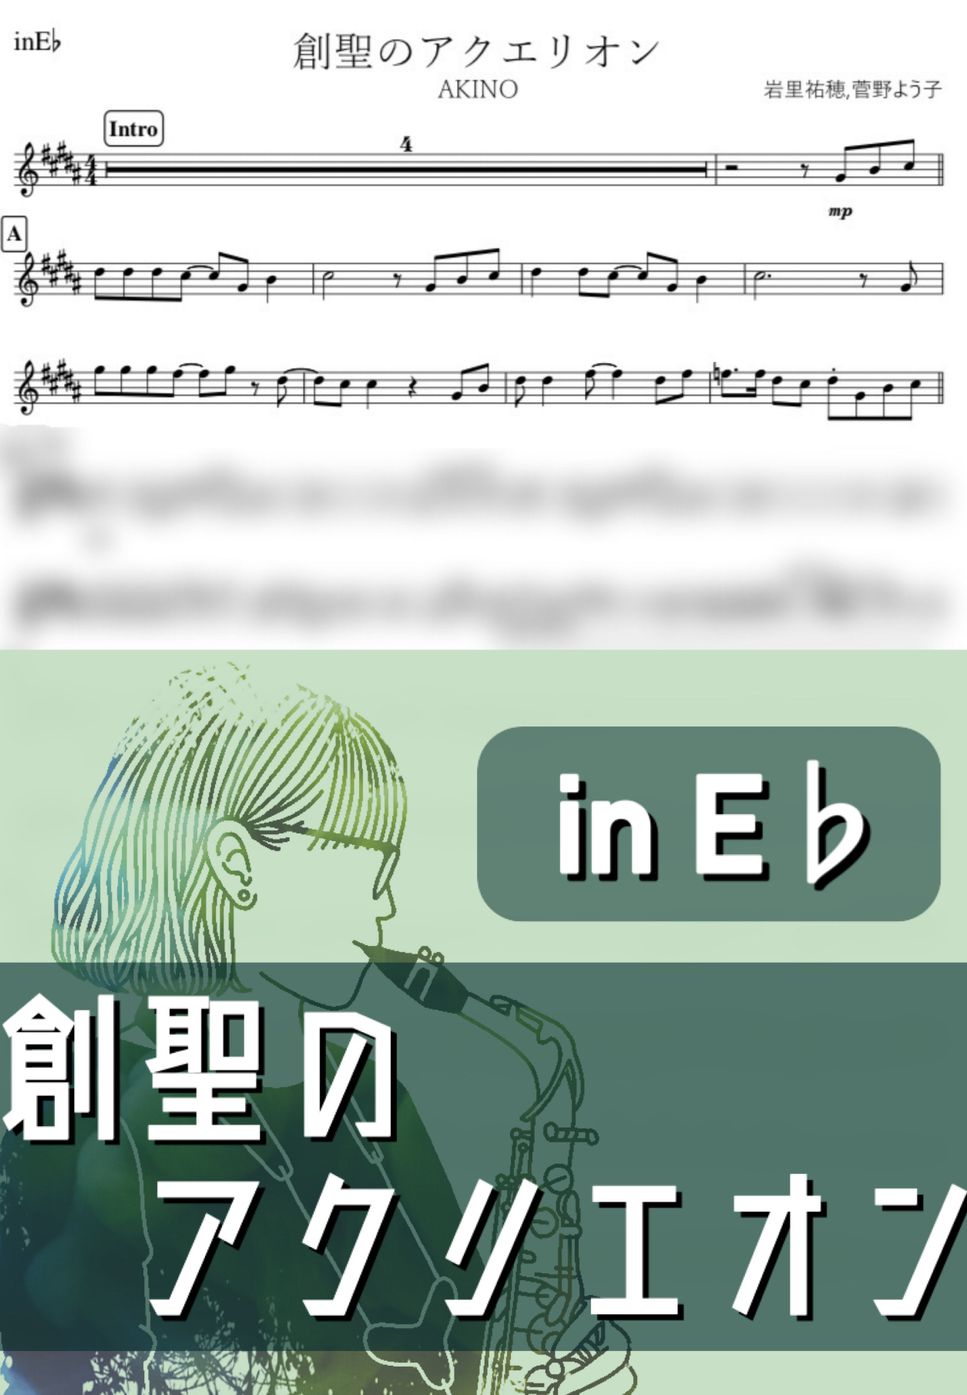 AKINO - 創聖のアクエリオン (E♭) by kanamusic